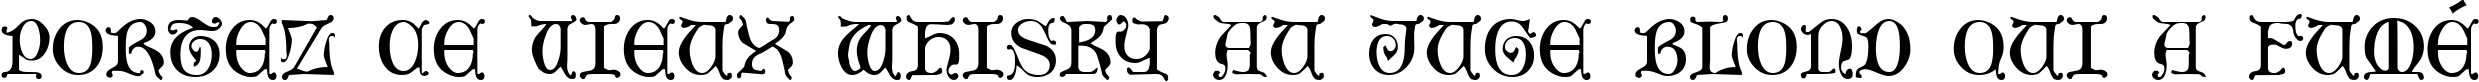 Пример написания шрифтом Aneirin текста на французском